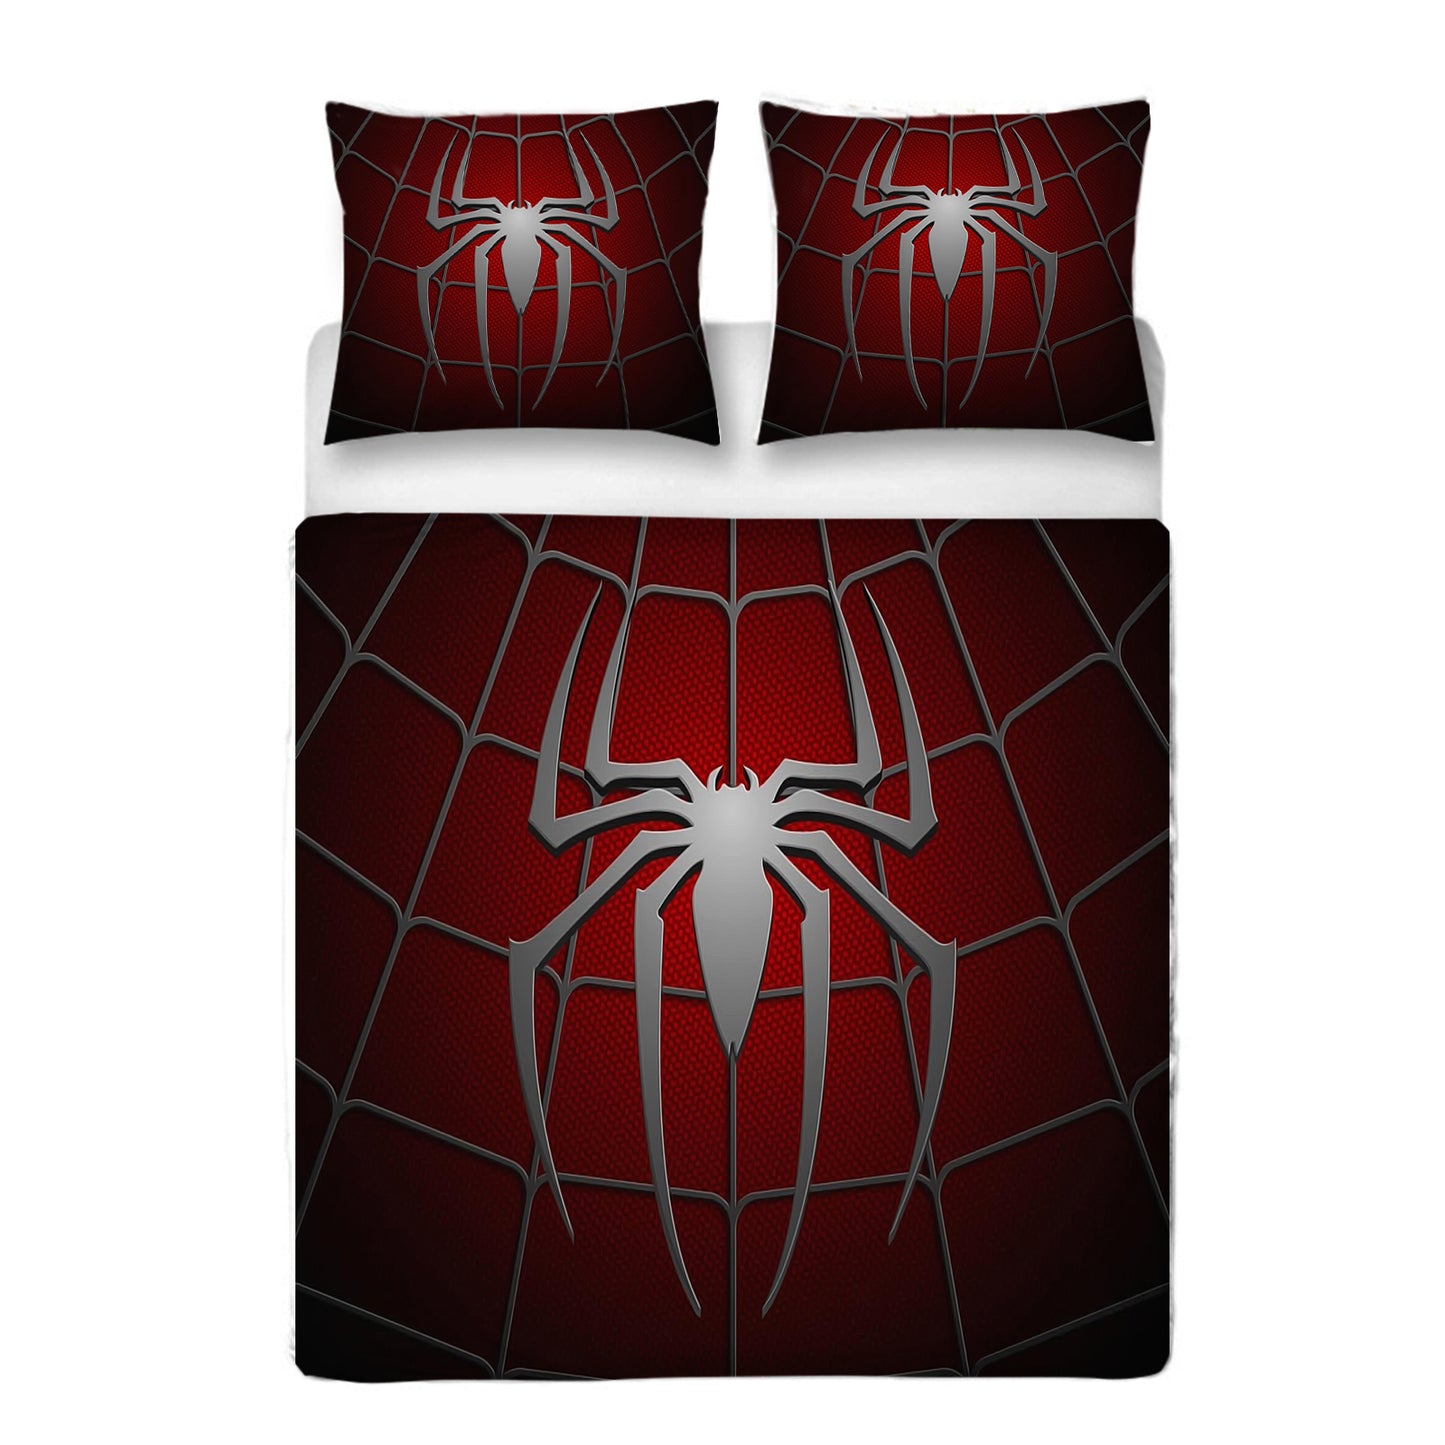 WONGS BEDDING Spider Duvet cover set Bedding Bedroom set